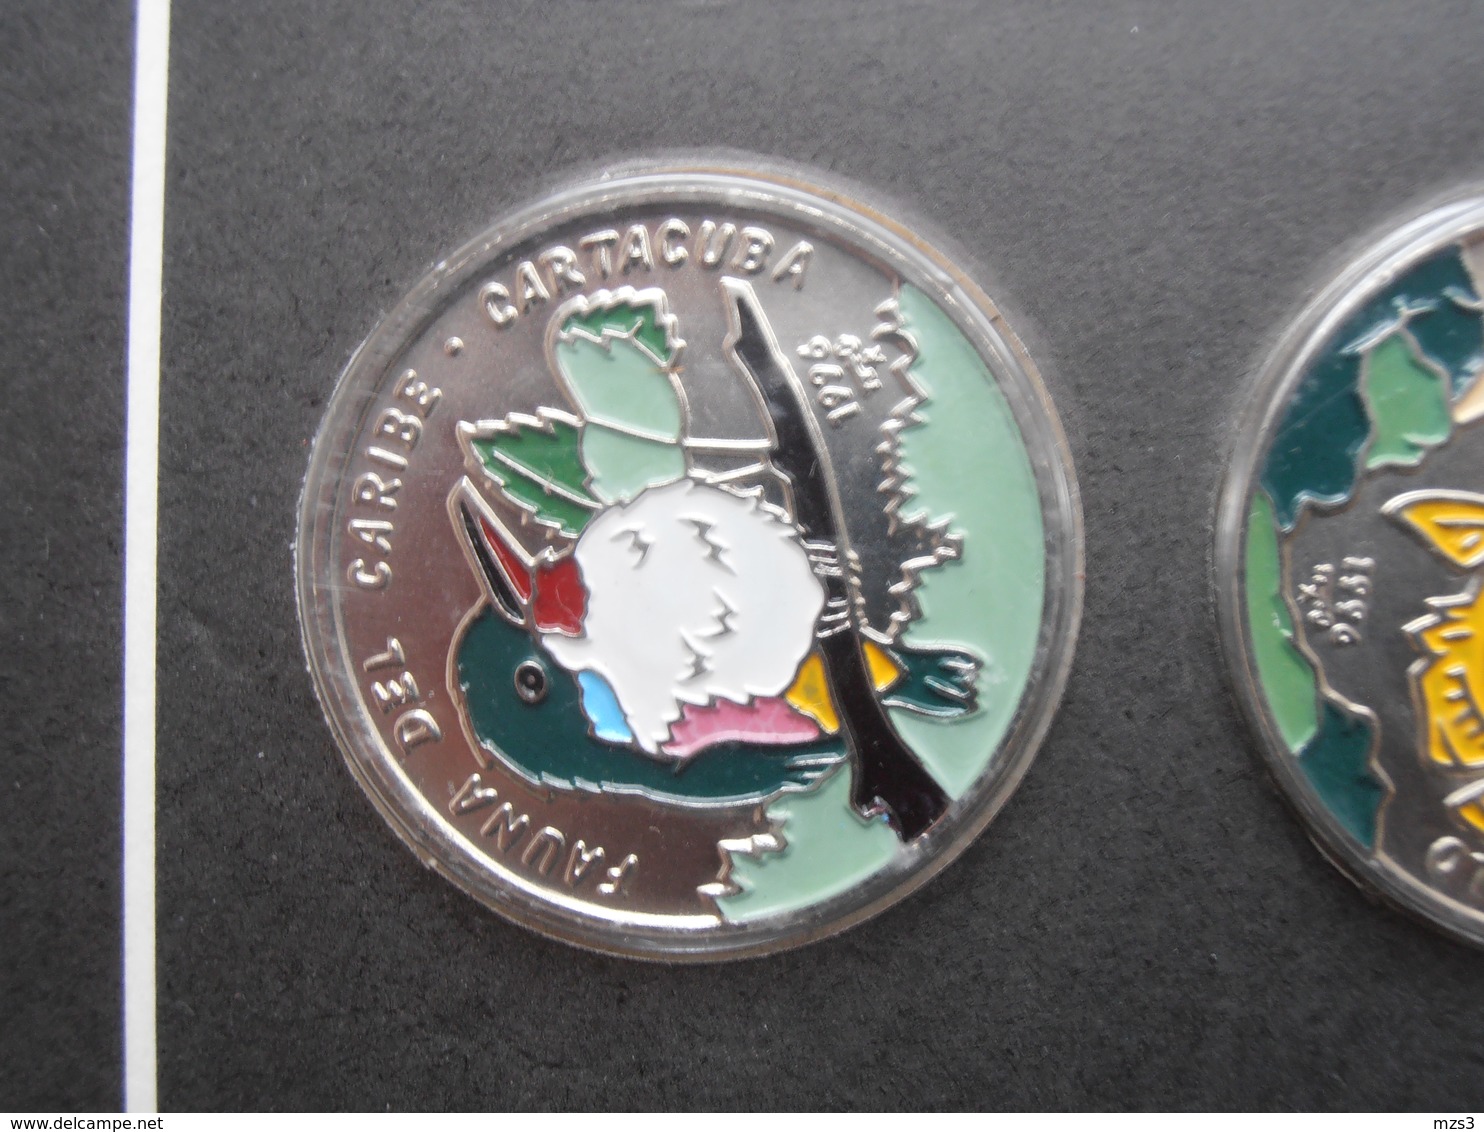 CUBA 6 coins of 1 PESO 1996 "FAUNA DEL CARIBE II" BU